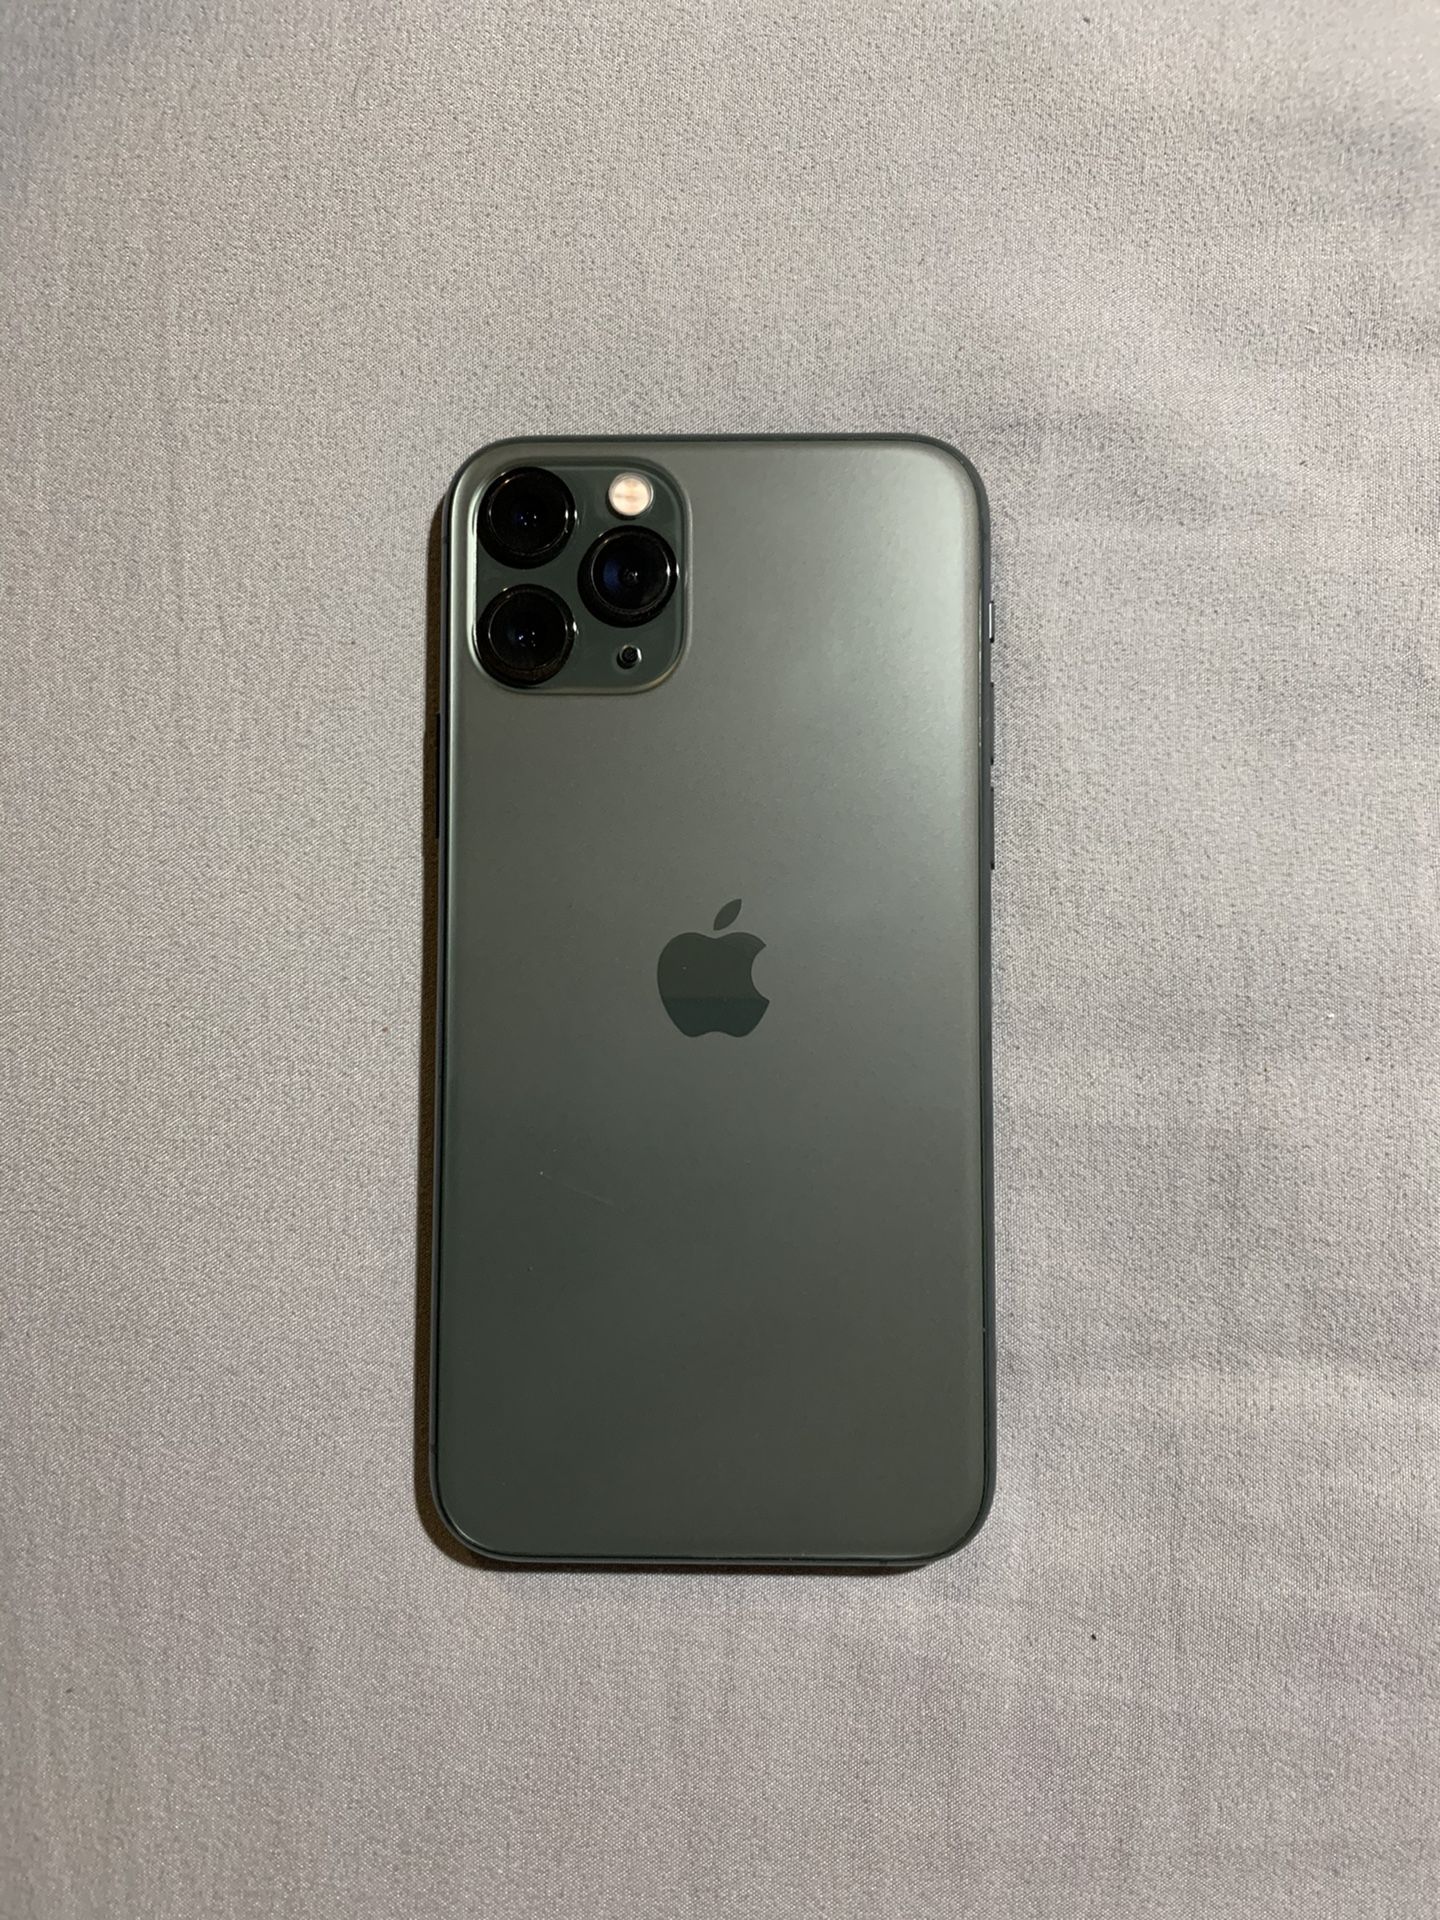 iPhone 11 Pro - Midnight Green - 64gb - Unlocked